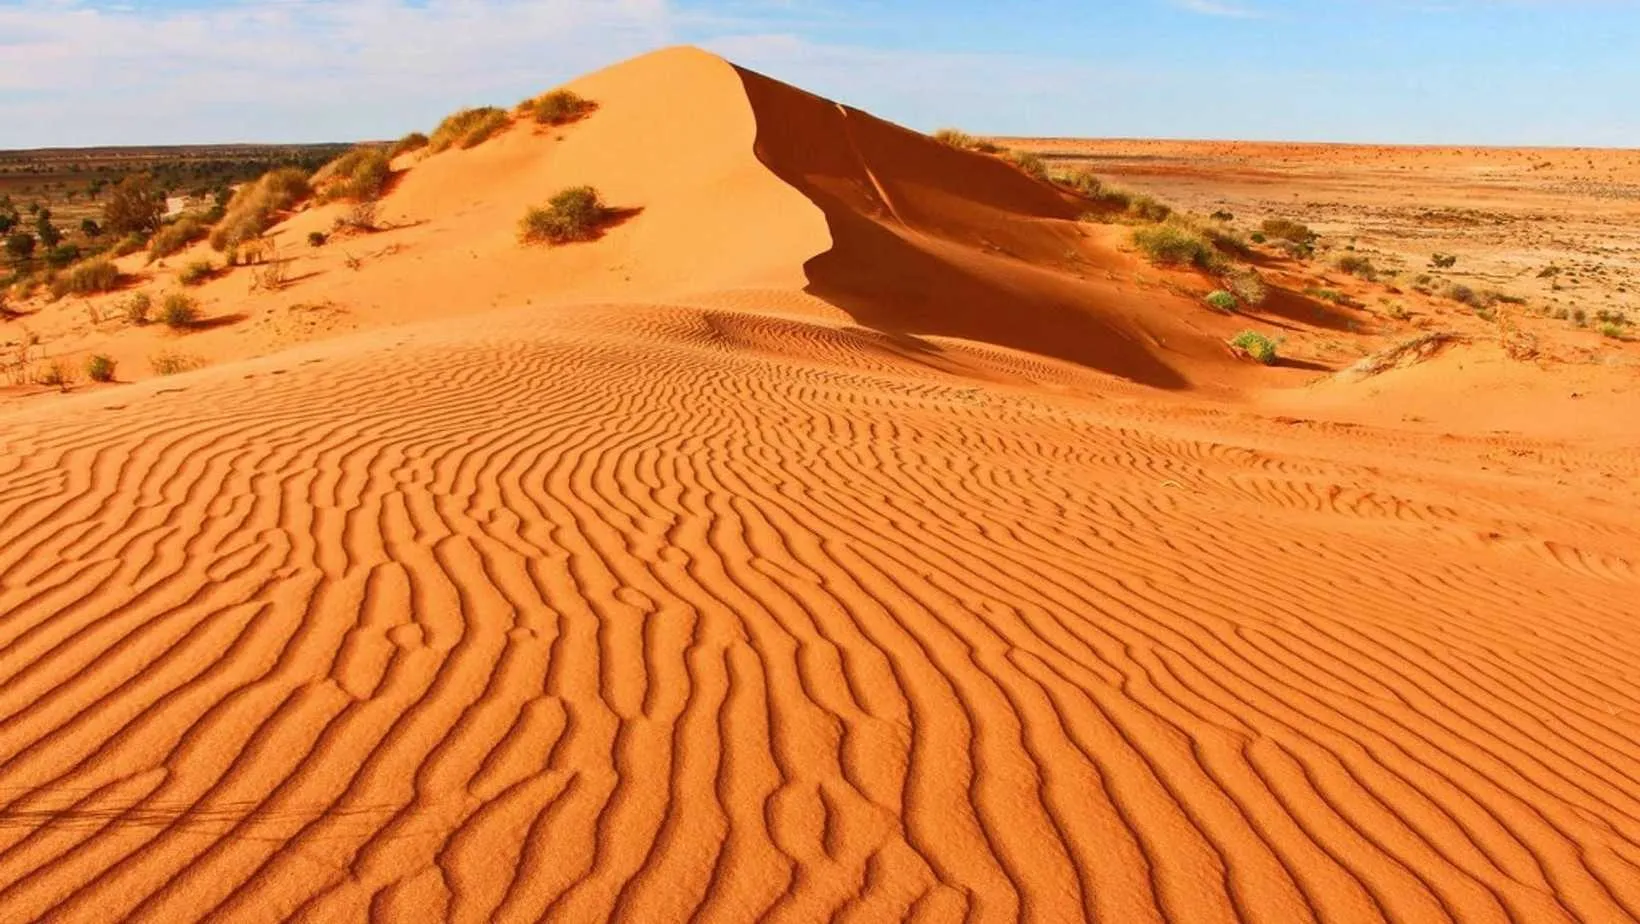 Does Australia Have Deserts?